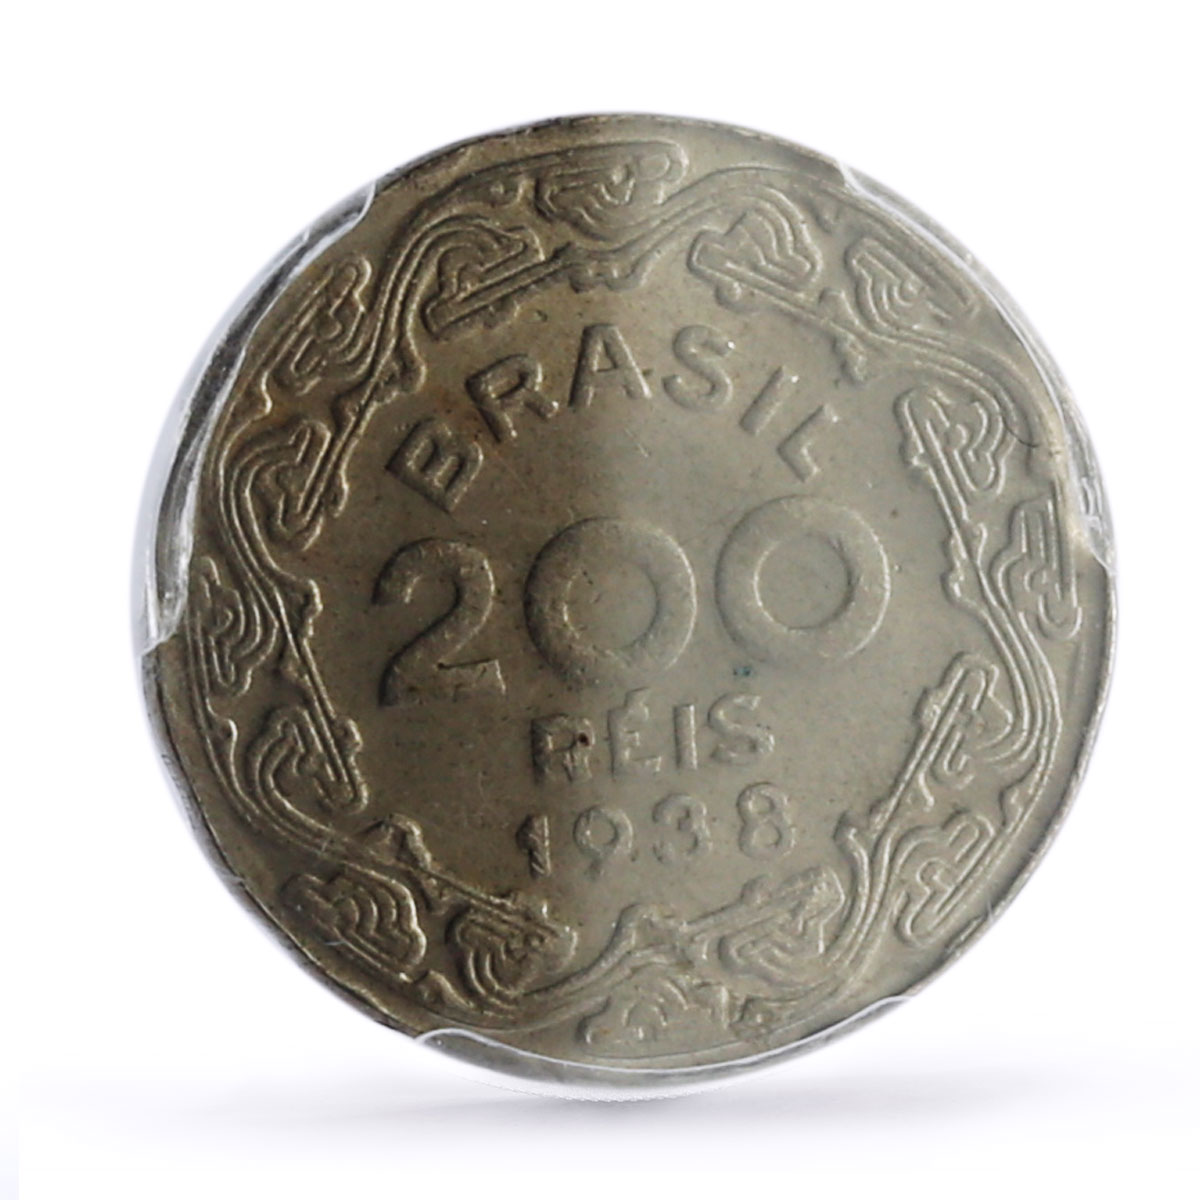 Brazil 200 reis President Getulio Vargas Politics MS64 PCGS CuNi coin 1938